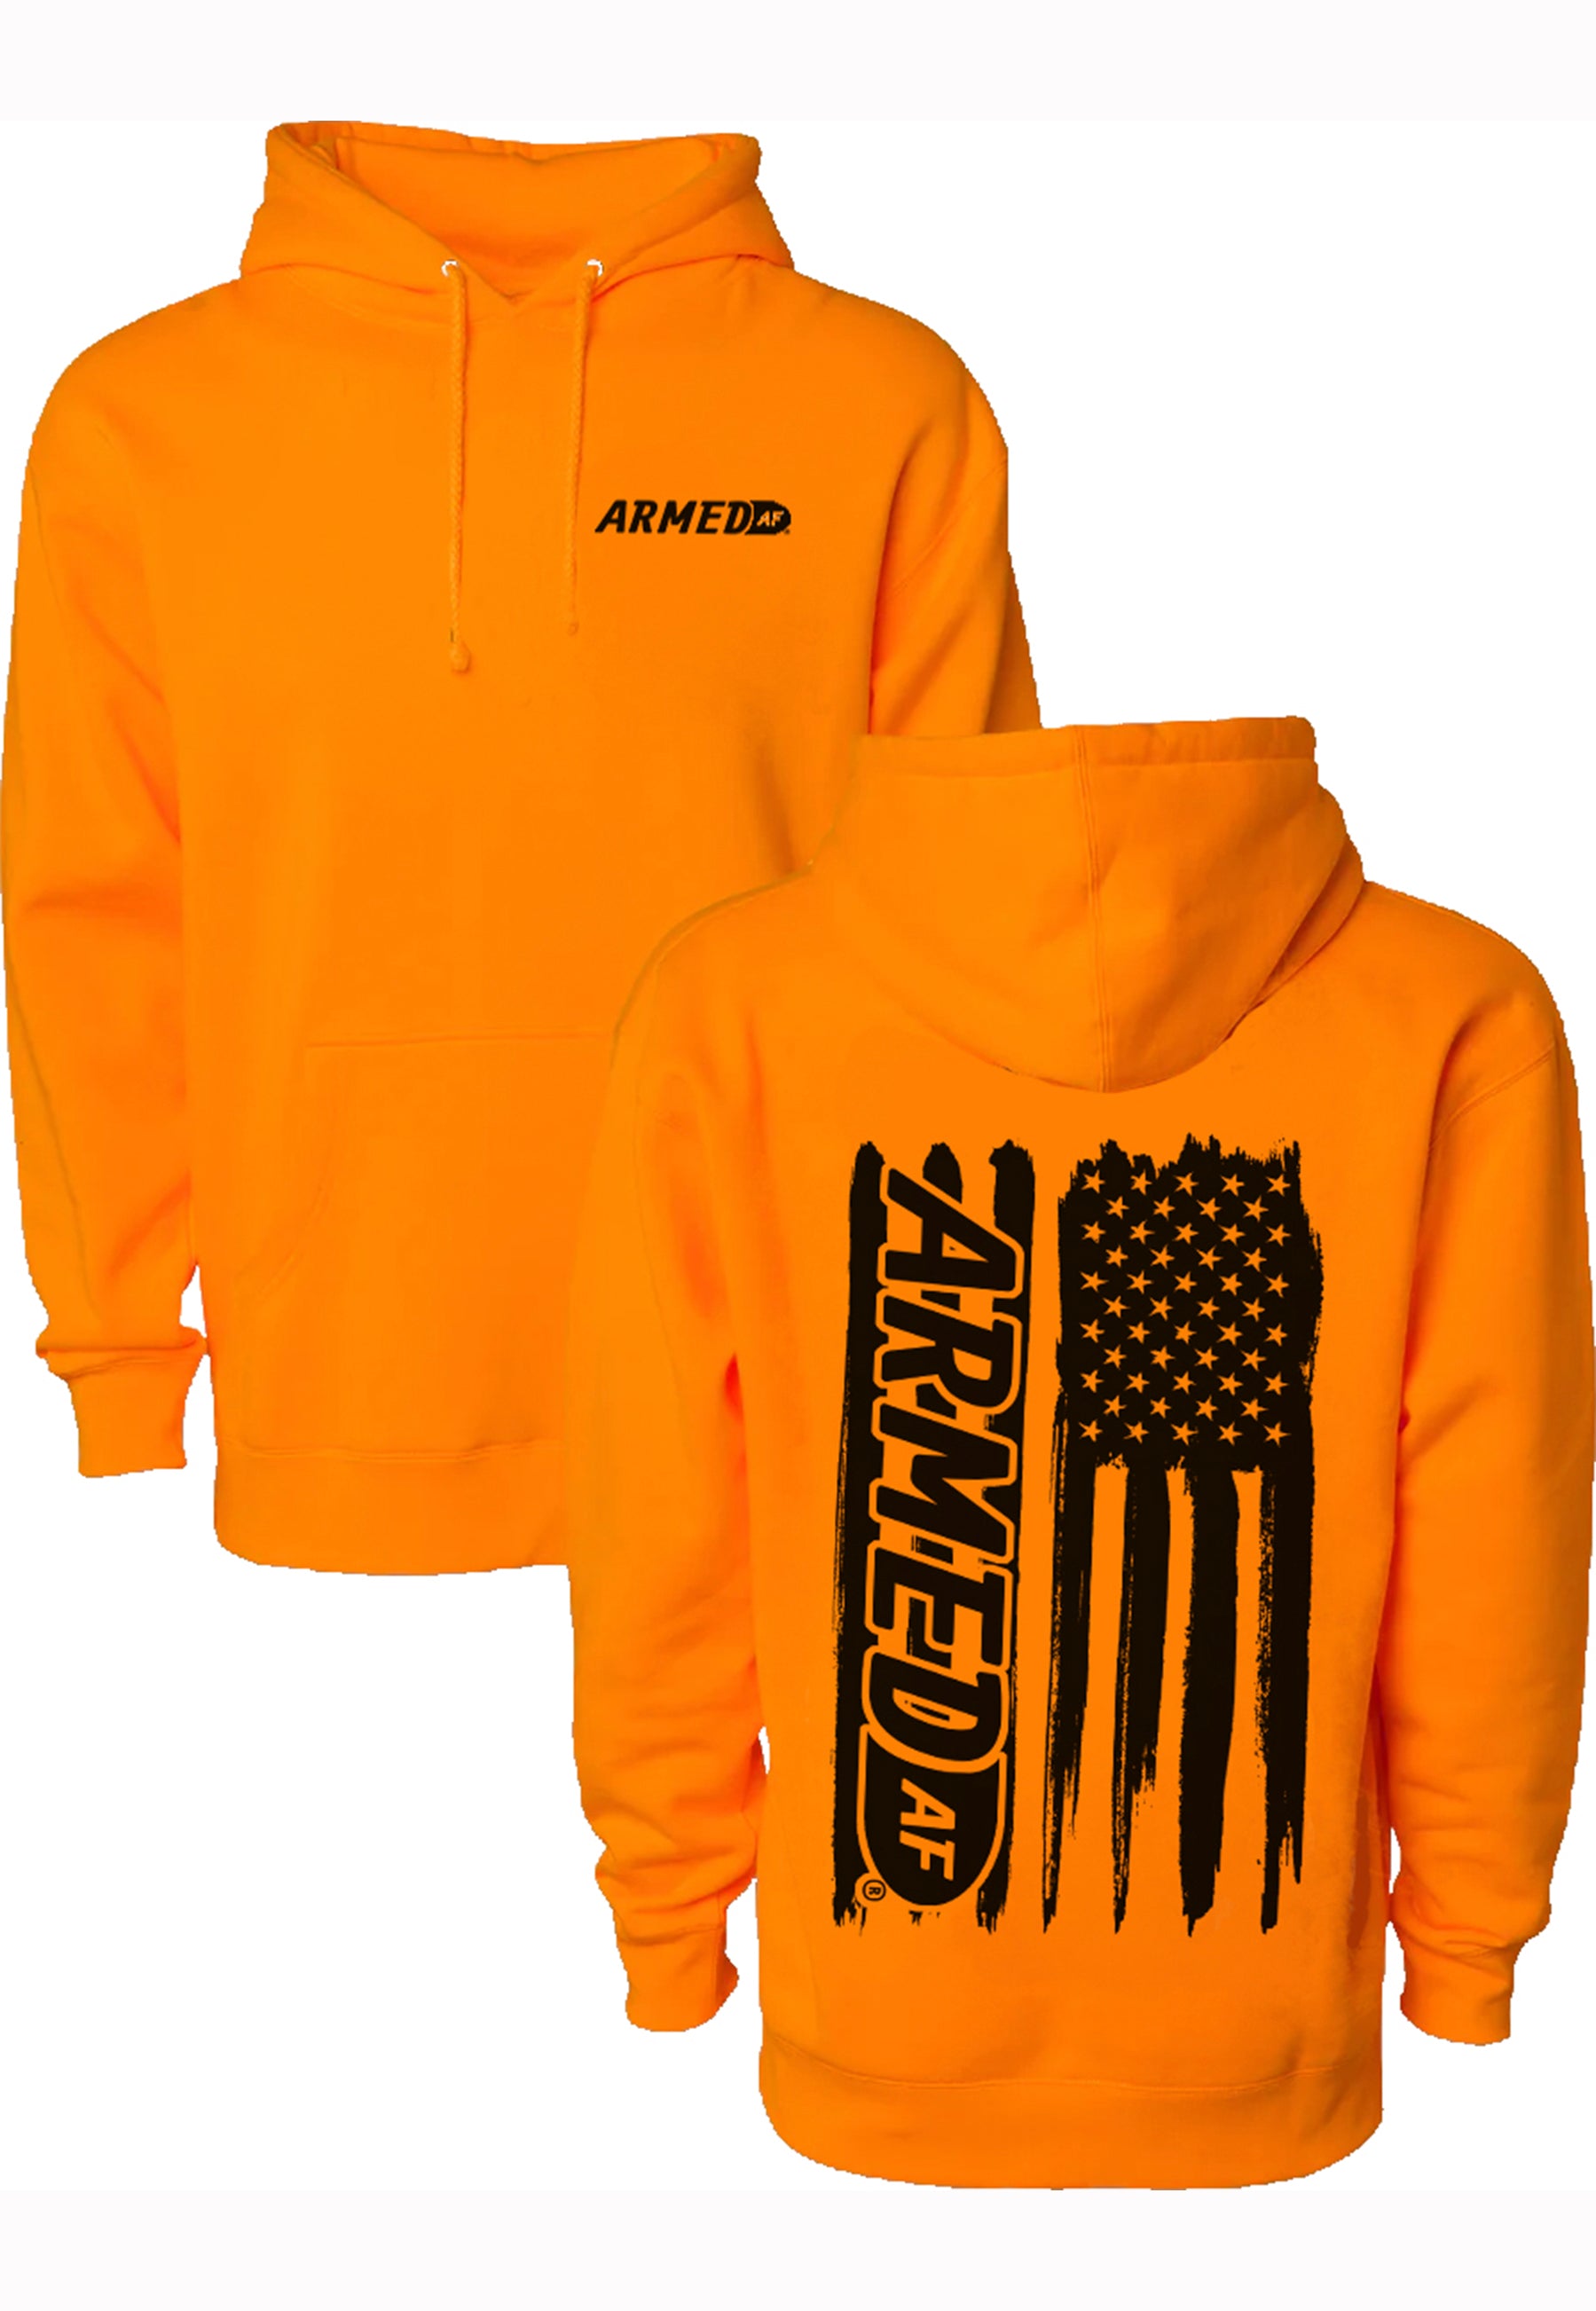 Gun range safety orange hoodie from ArmedAF® brand